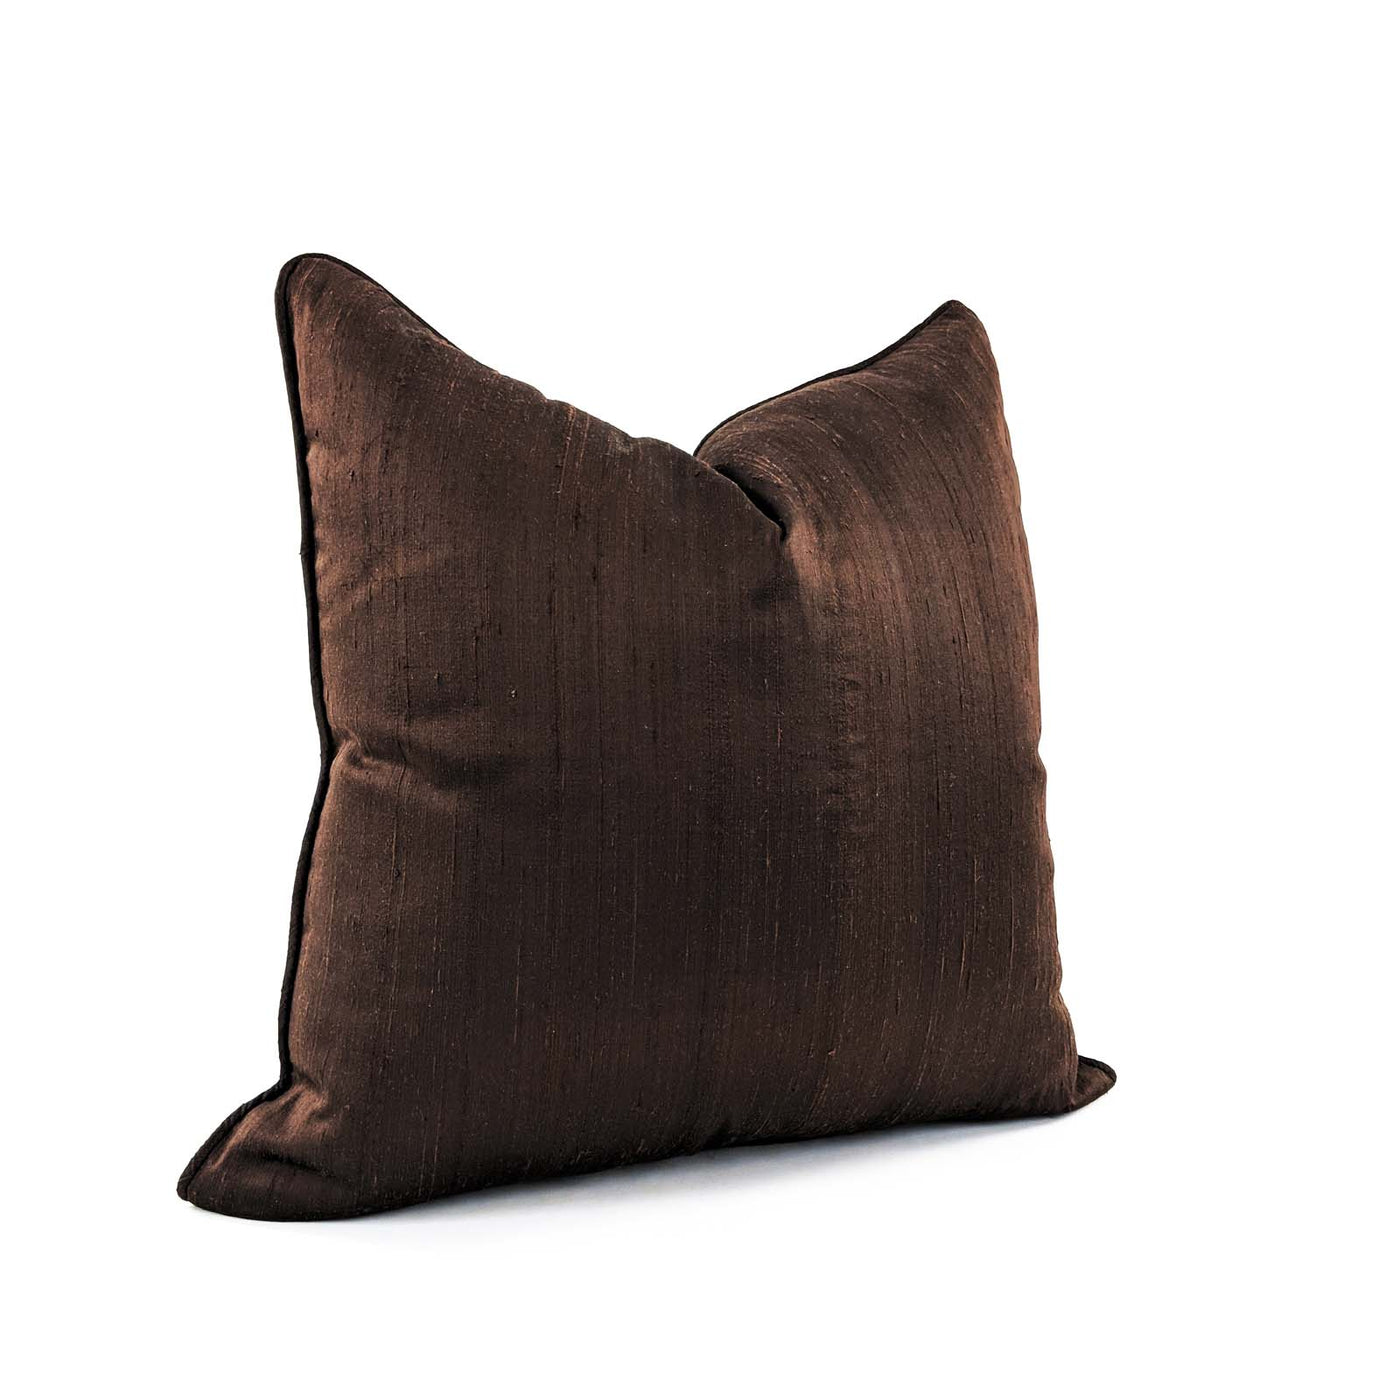 Dupion Chocolate Cushion Large 21"